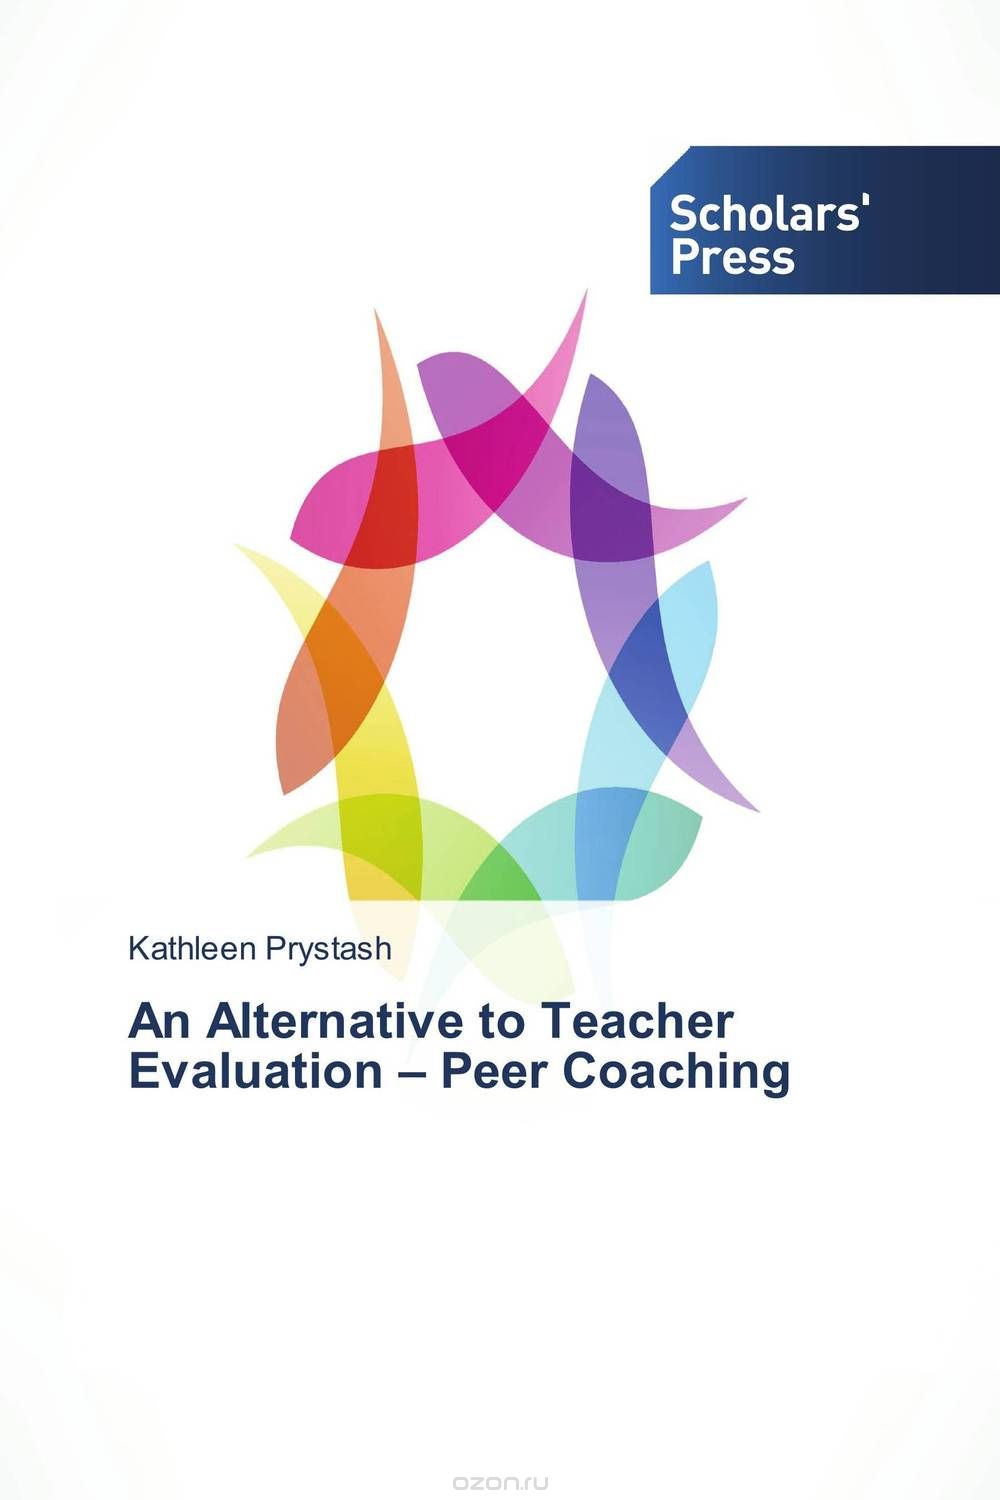 Скачать книгу "An Alternative to Teacher Evaluation – Peer Coaching"